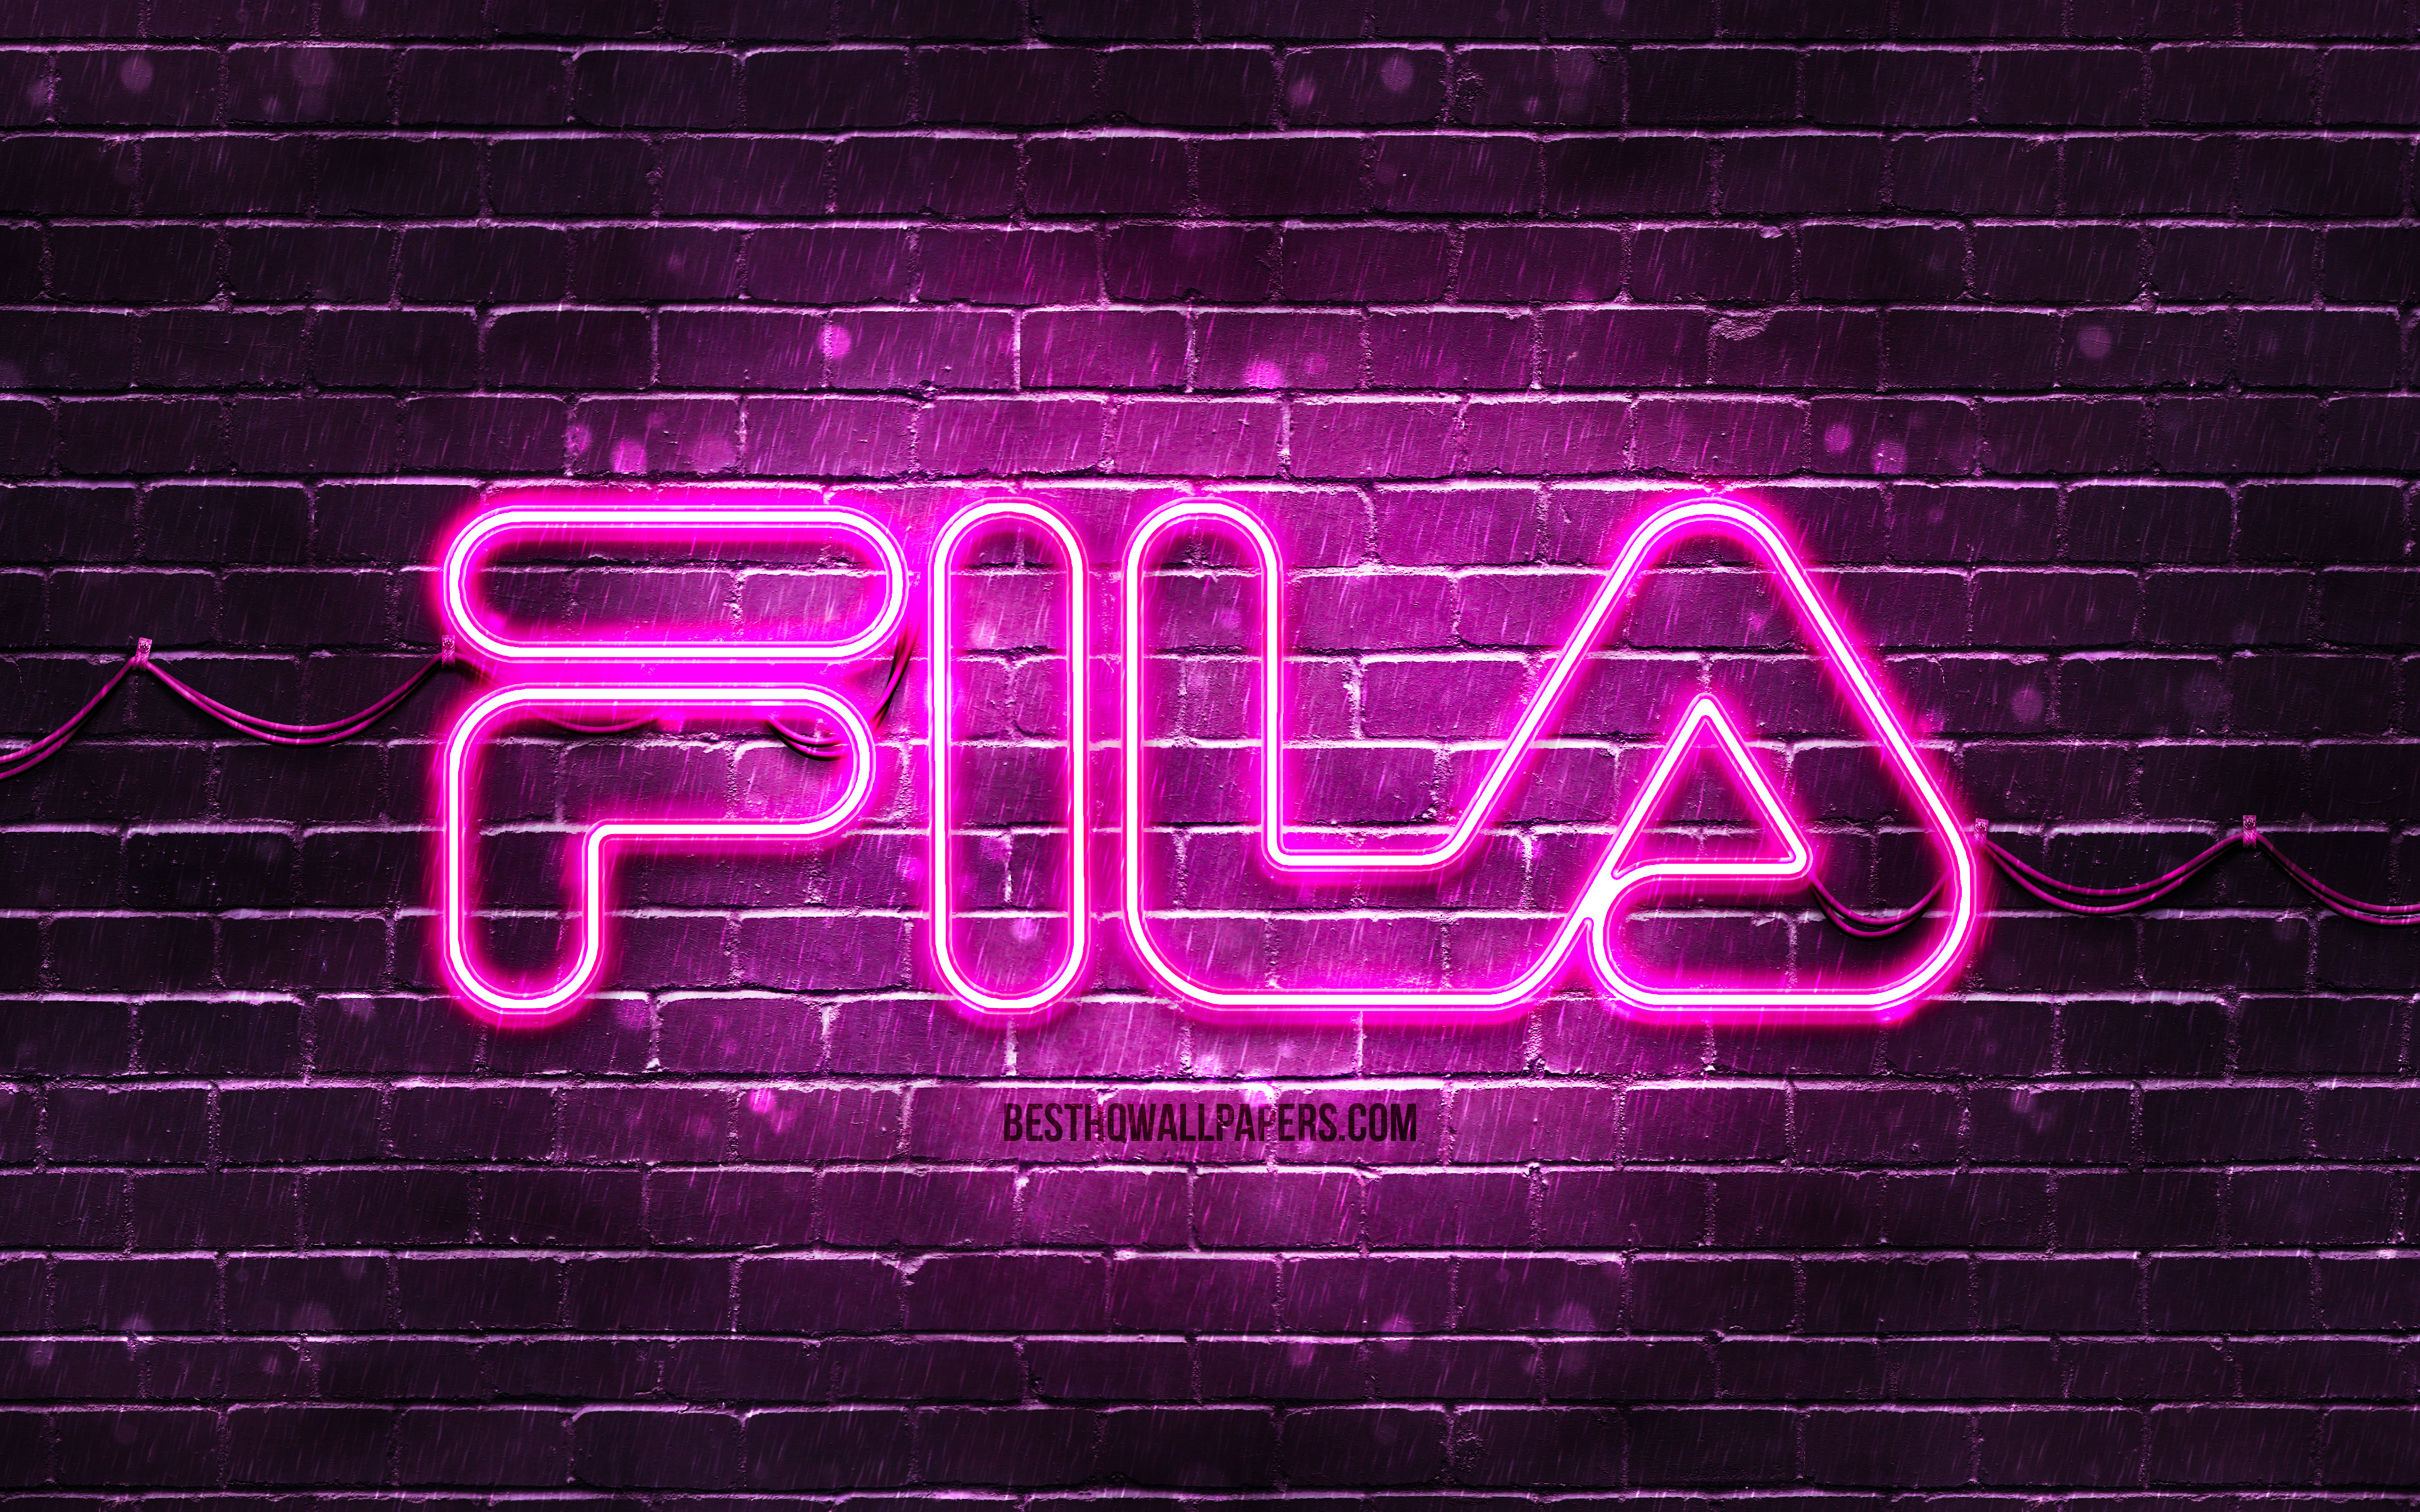 Download wallpaper Fila purple logo, 4k, purple brickwall, Fila logo, brands, Fila neon logo, Fila for desktop with resolution 3840x2400. High Quality HD picture wallpaper